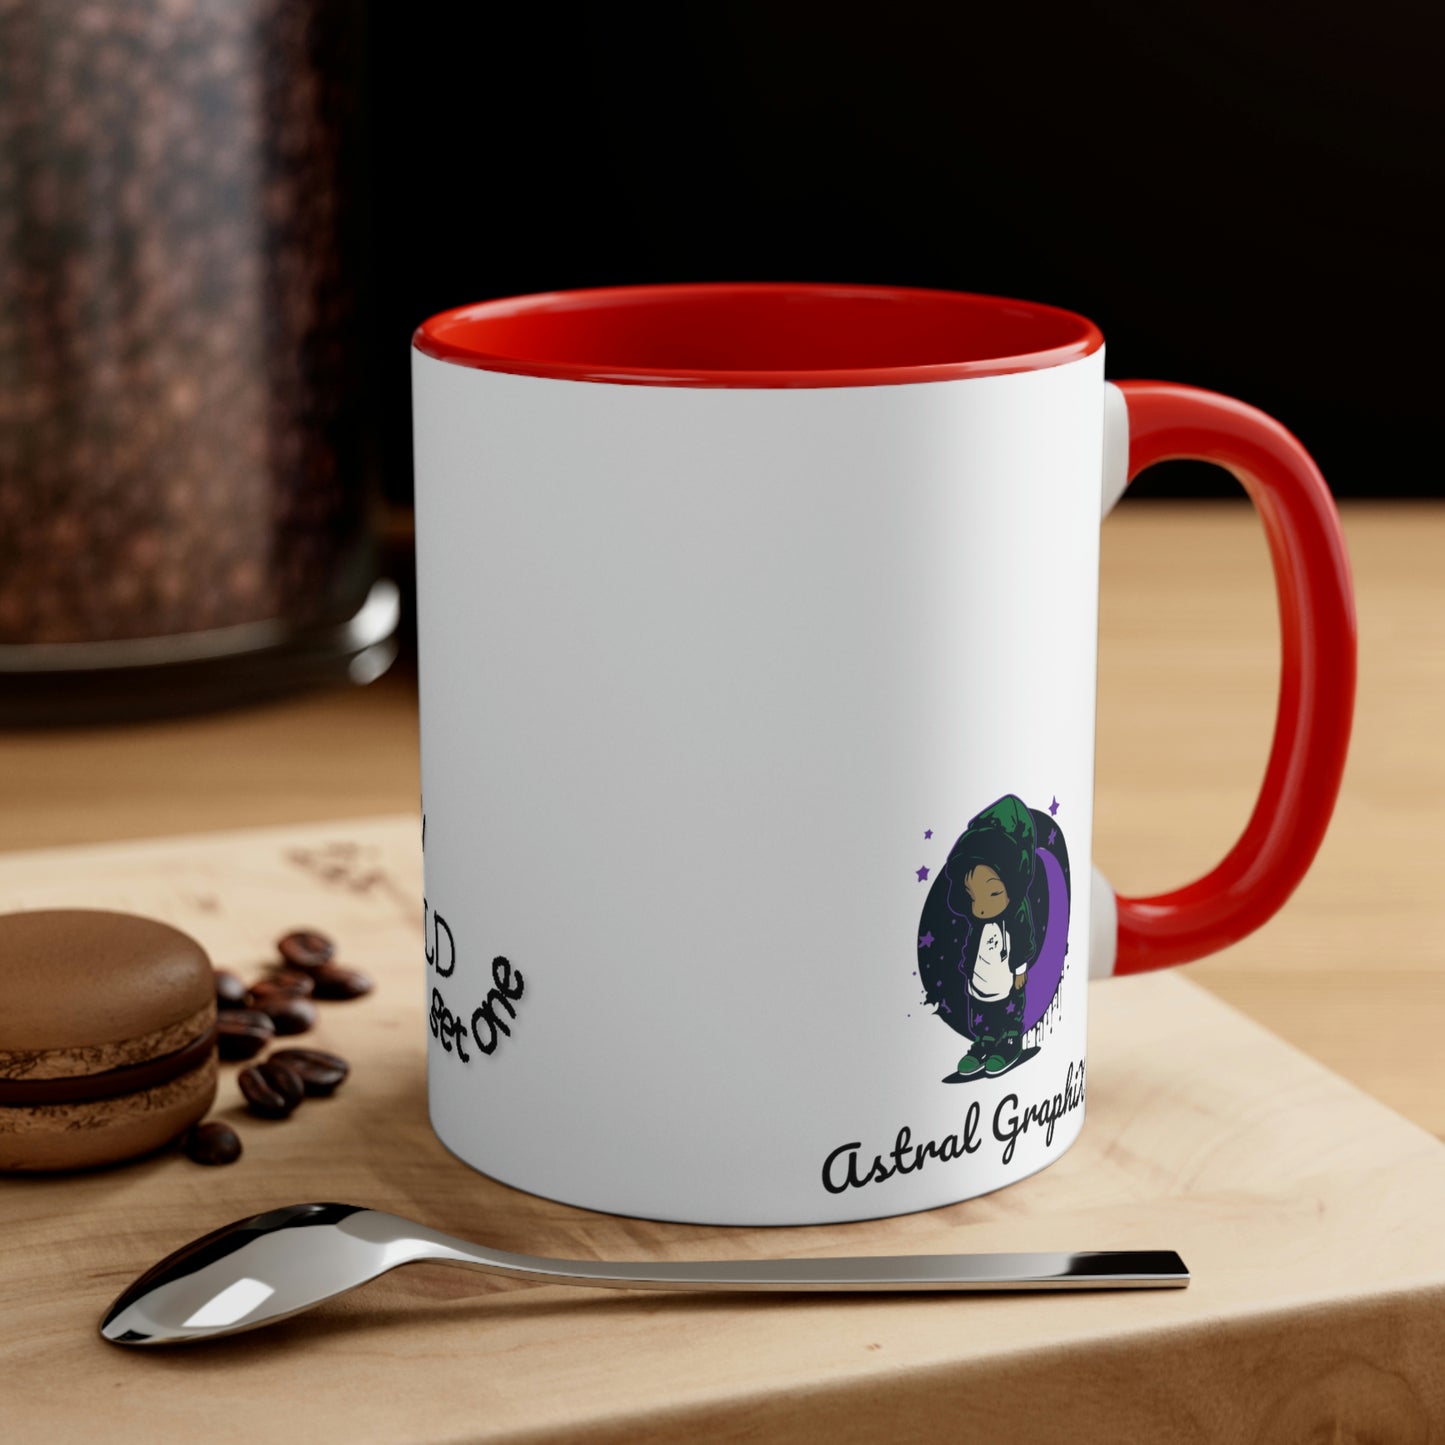 Word Art Collection - Accent Coffee Mug, 11oz - Life is Good